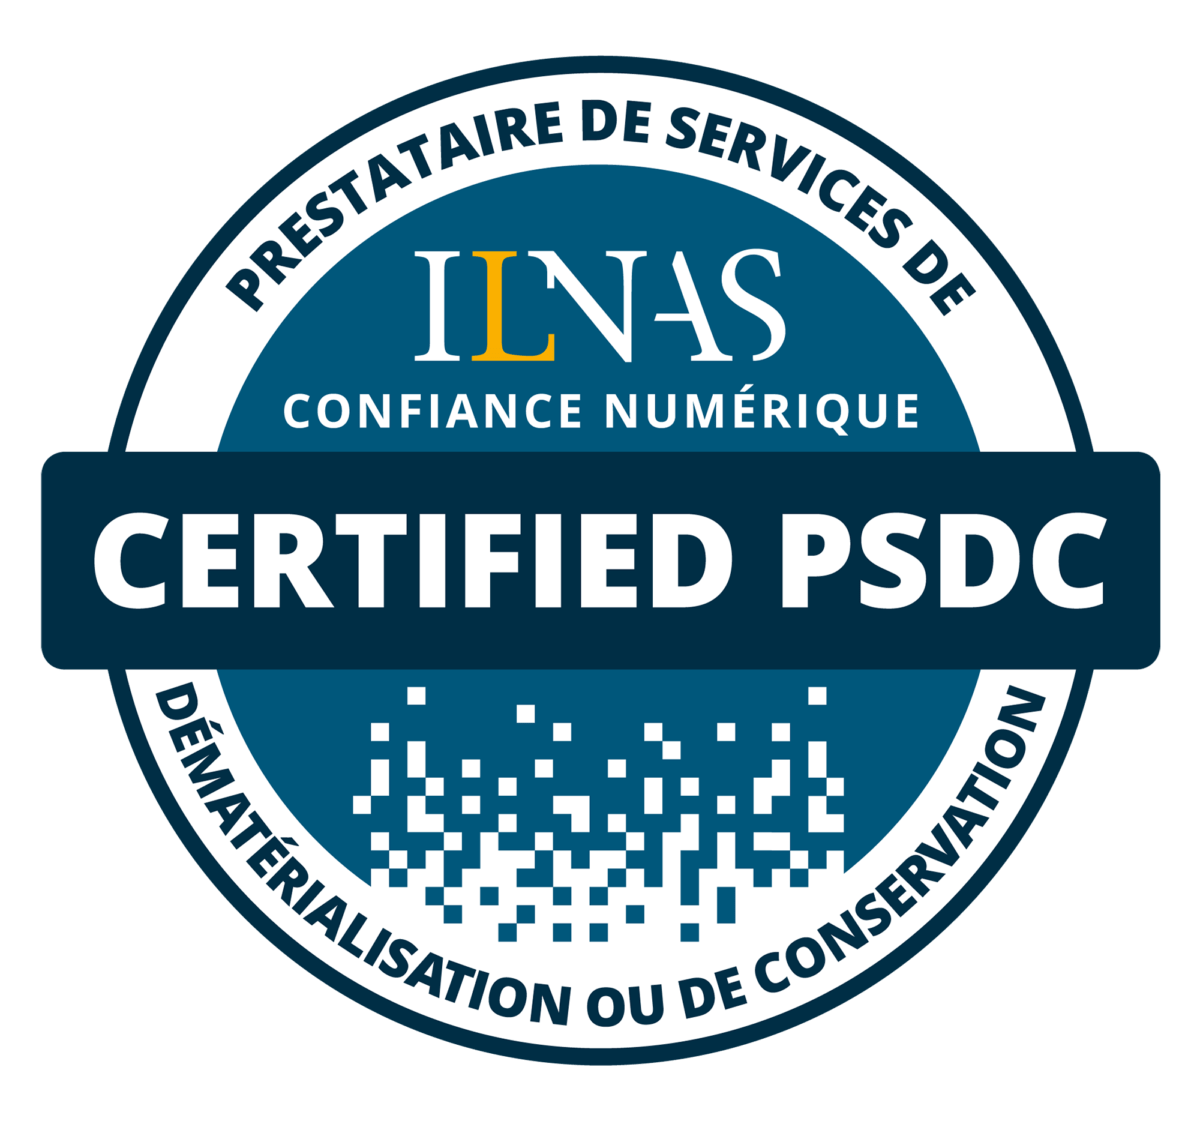 Certification - PSDC